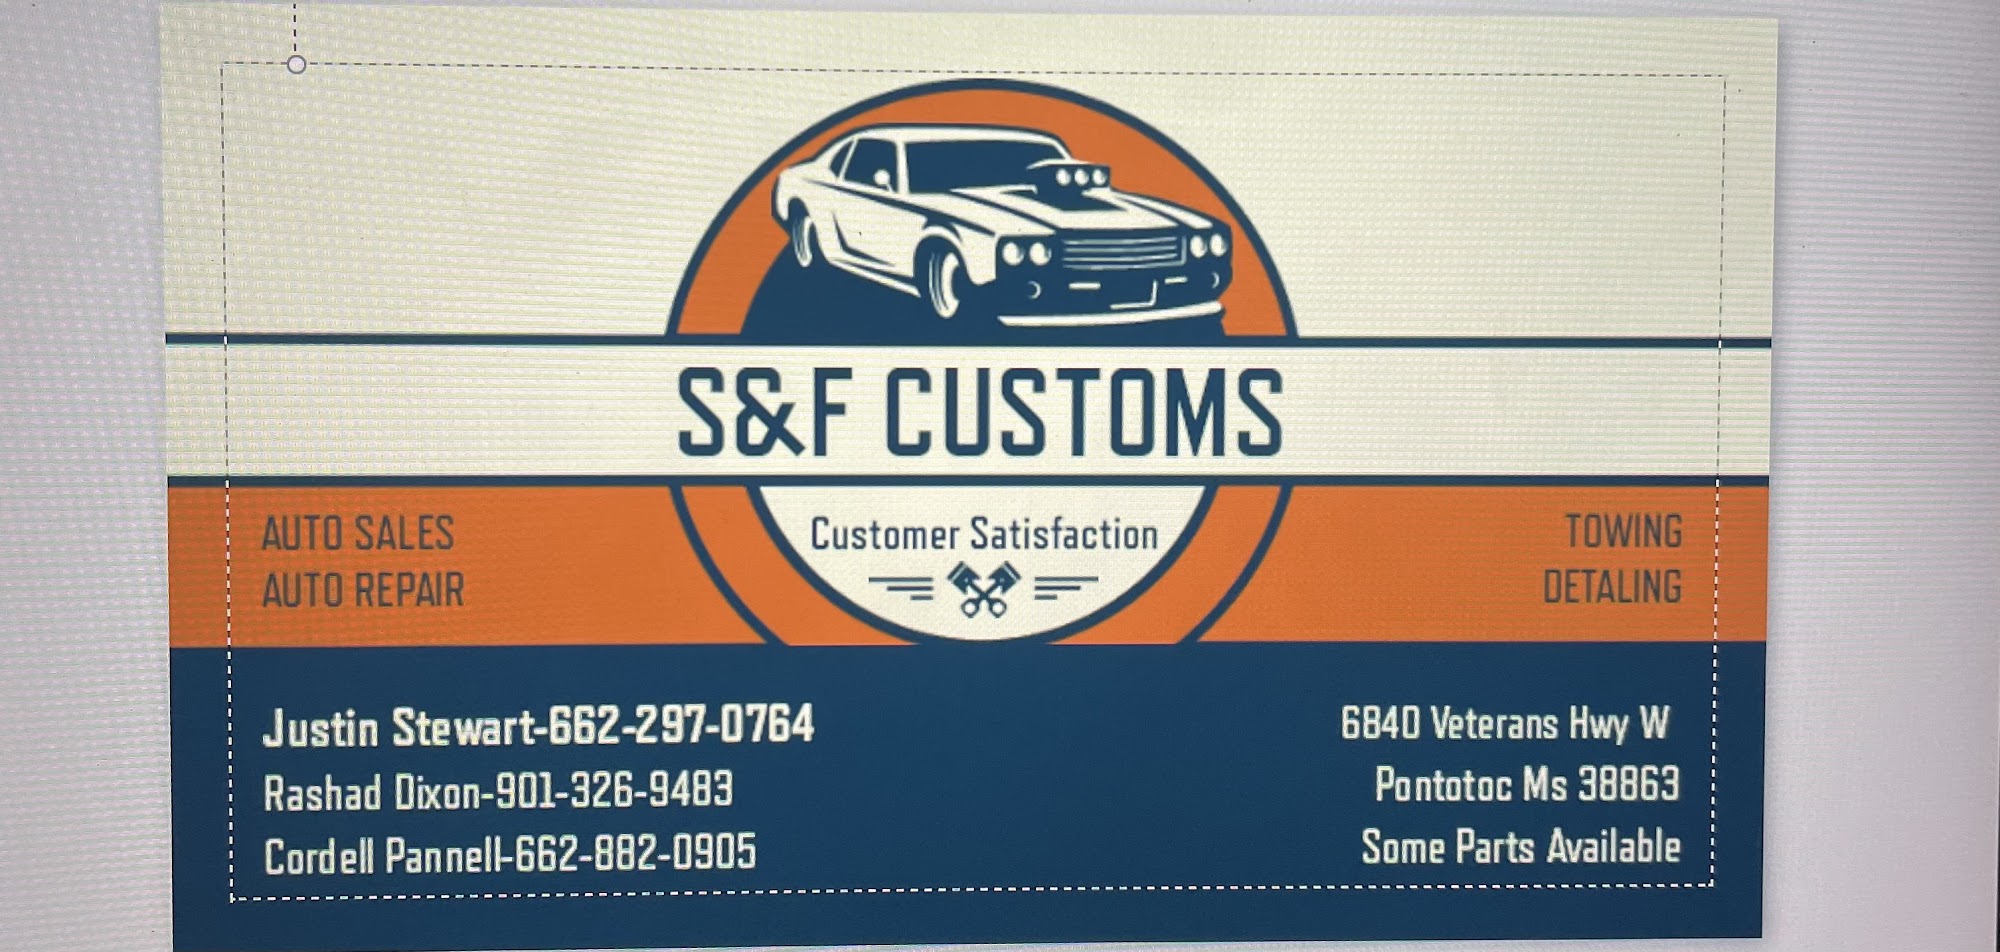 S&F Customs